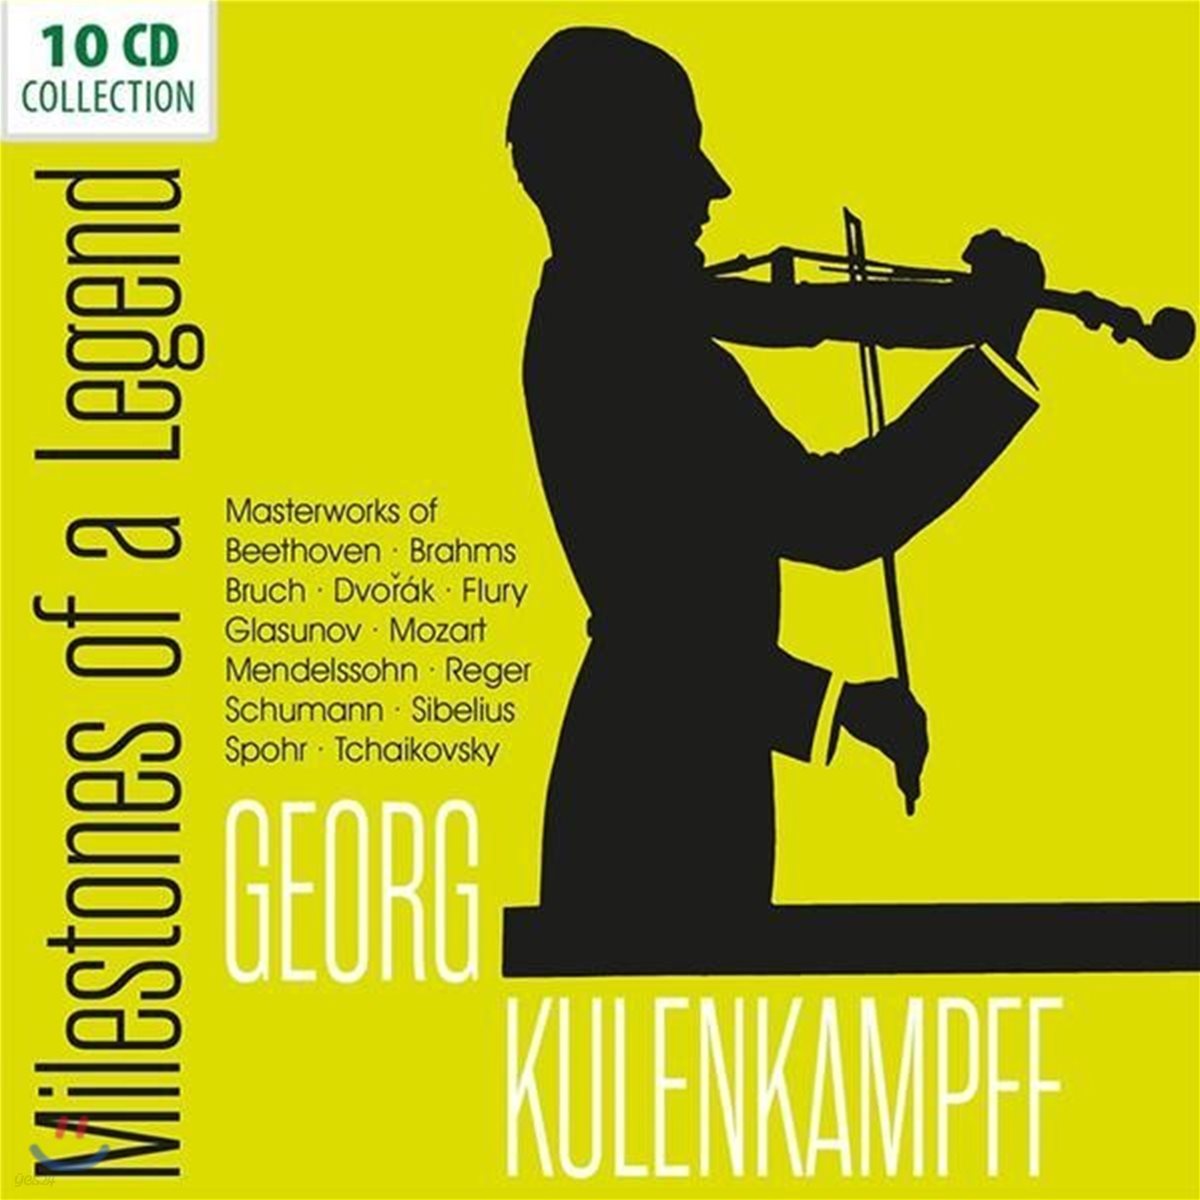 Georg Kulenkampff 게오르그 쿨렌캄프 - 명연주, 명반 컬렉션 (Milestones Of A Legend)